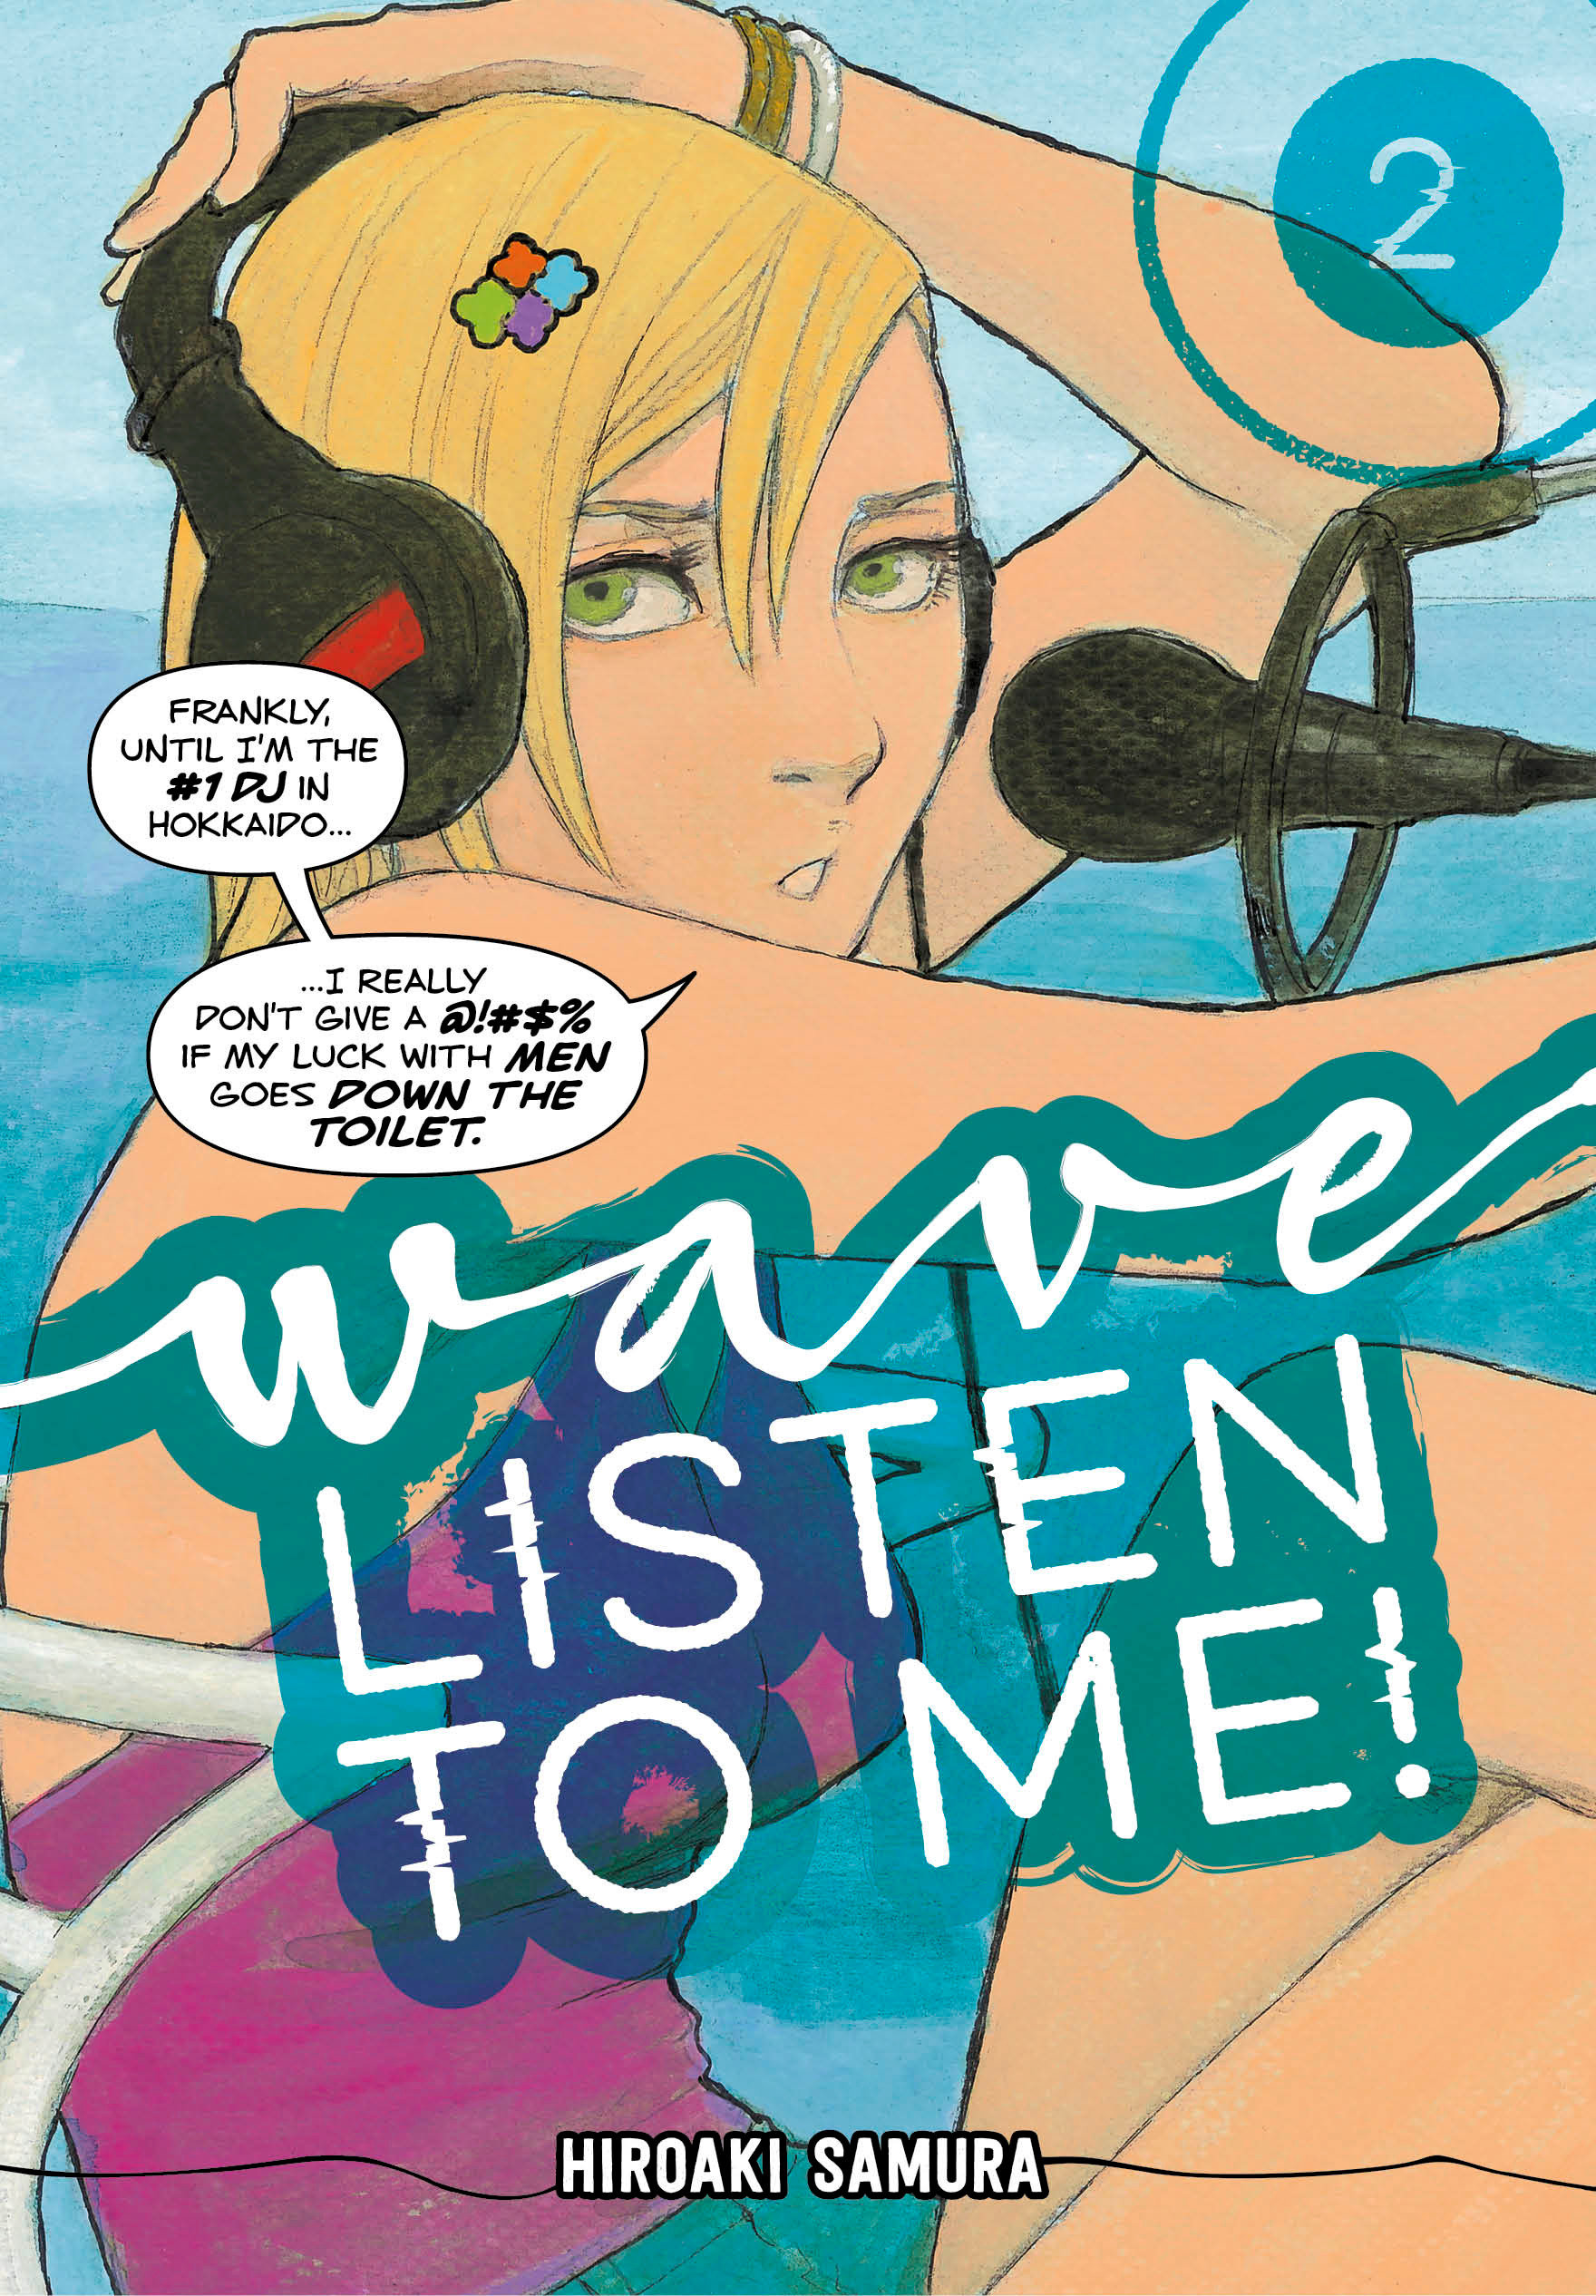 Wave Listen To Me Manga Volume 2